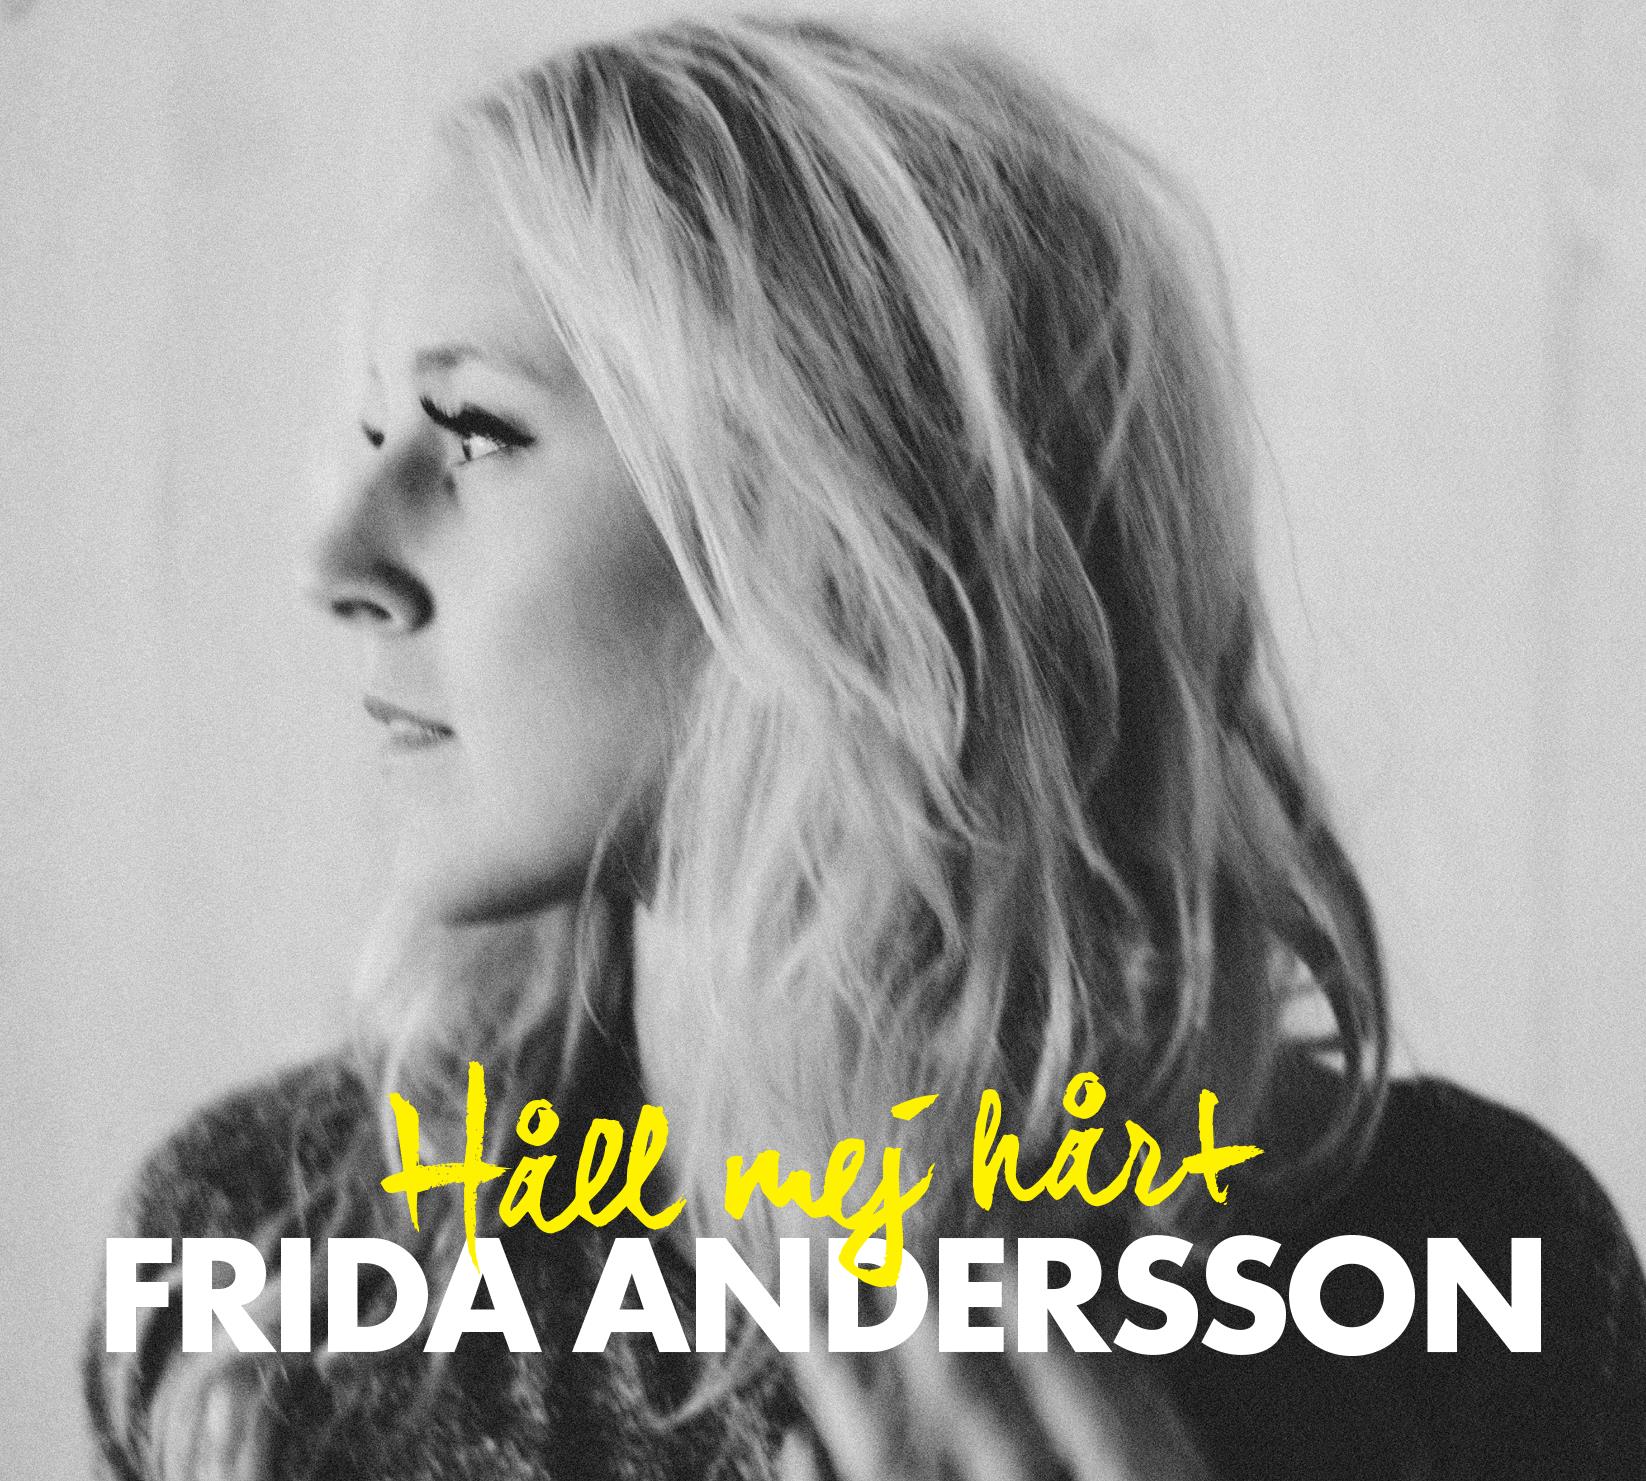 Frida Andersson